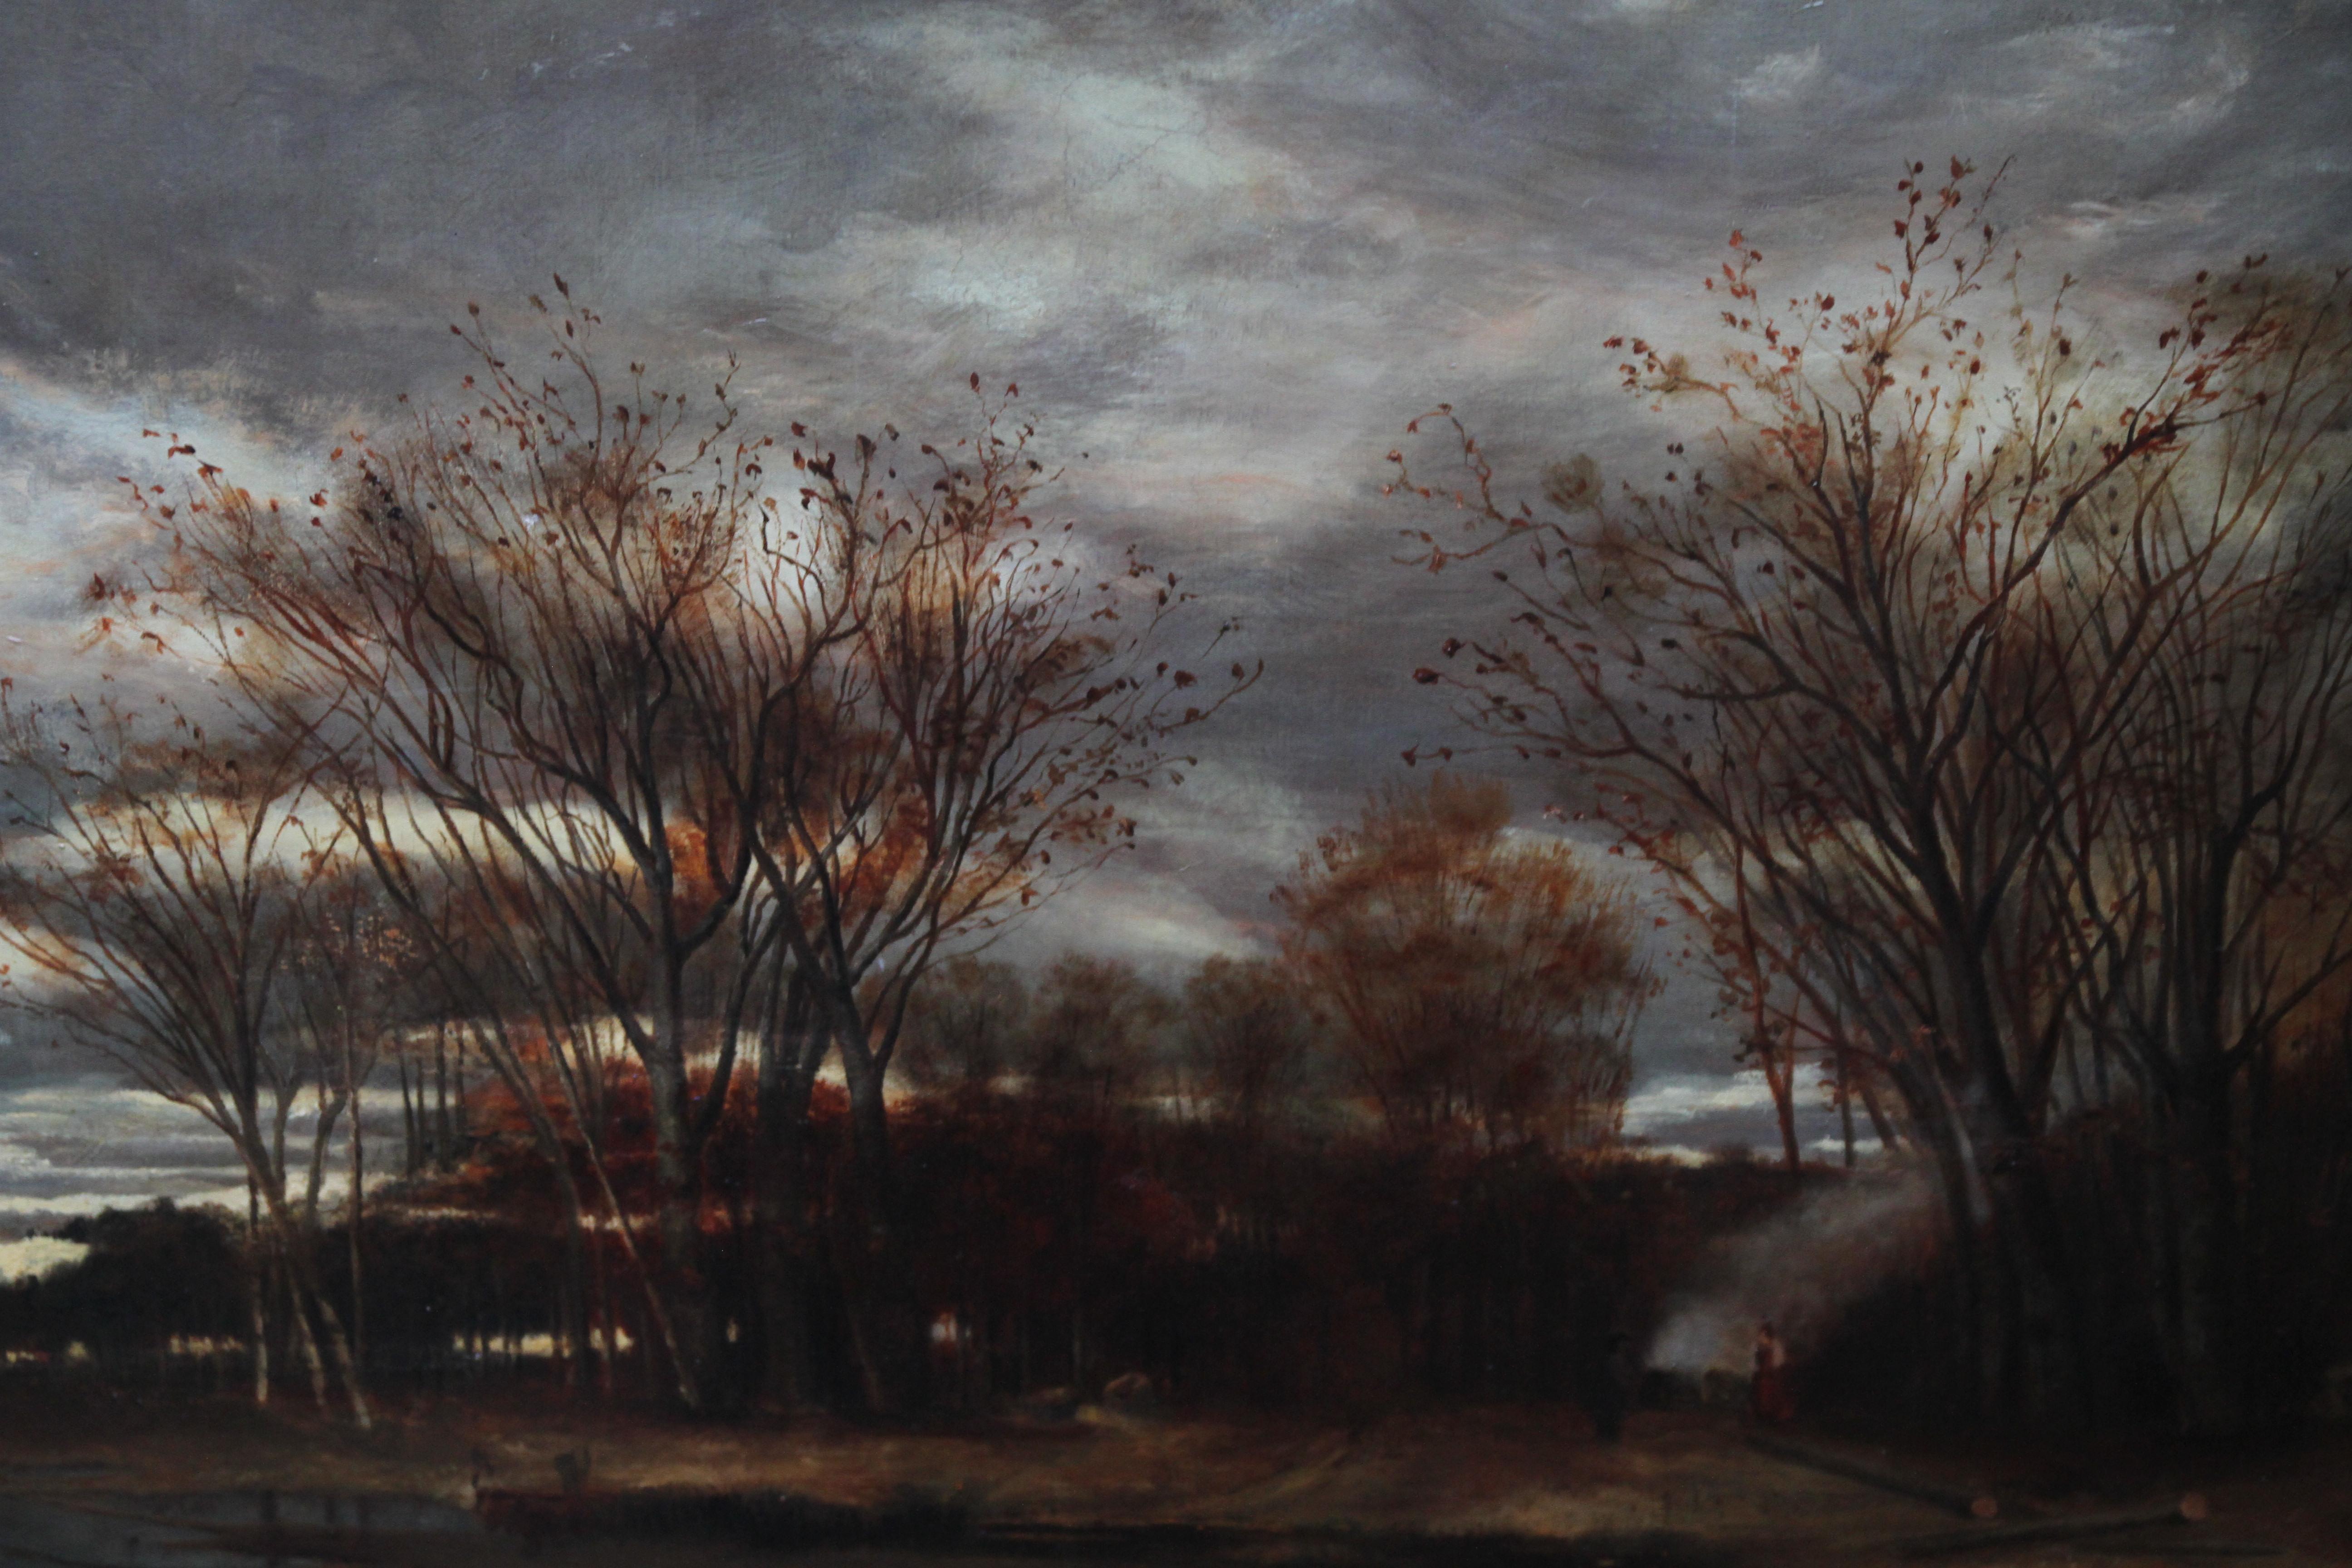 Sunset after Rain - Scottish 19th Century art Glasgow Boy landscape oil painting - Black Landscape Painting by John Reid Murray